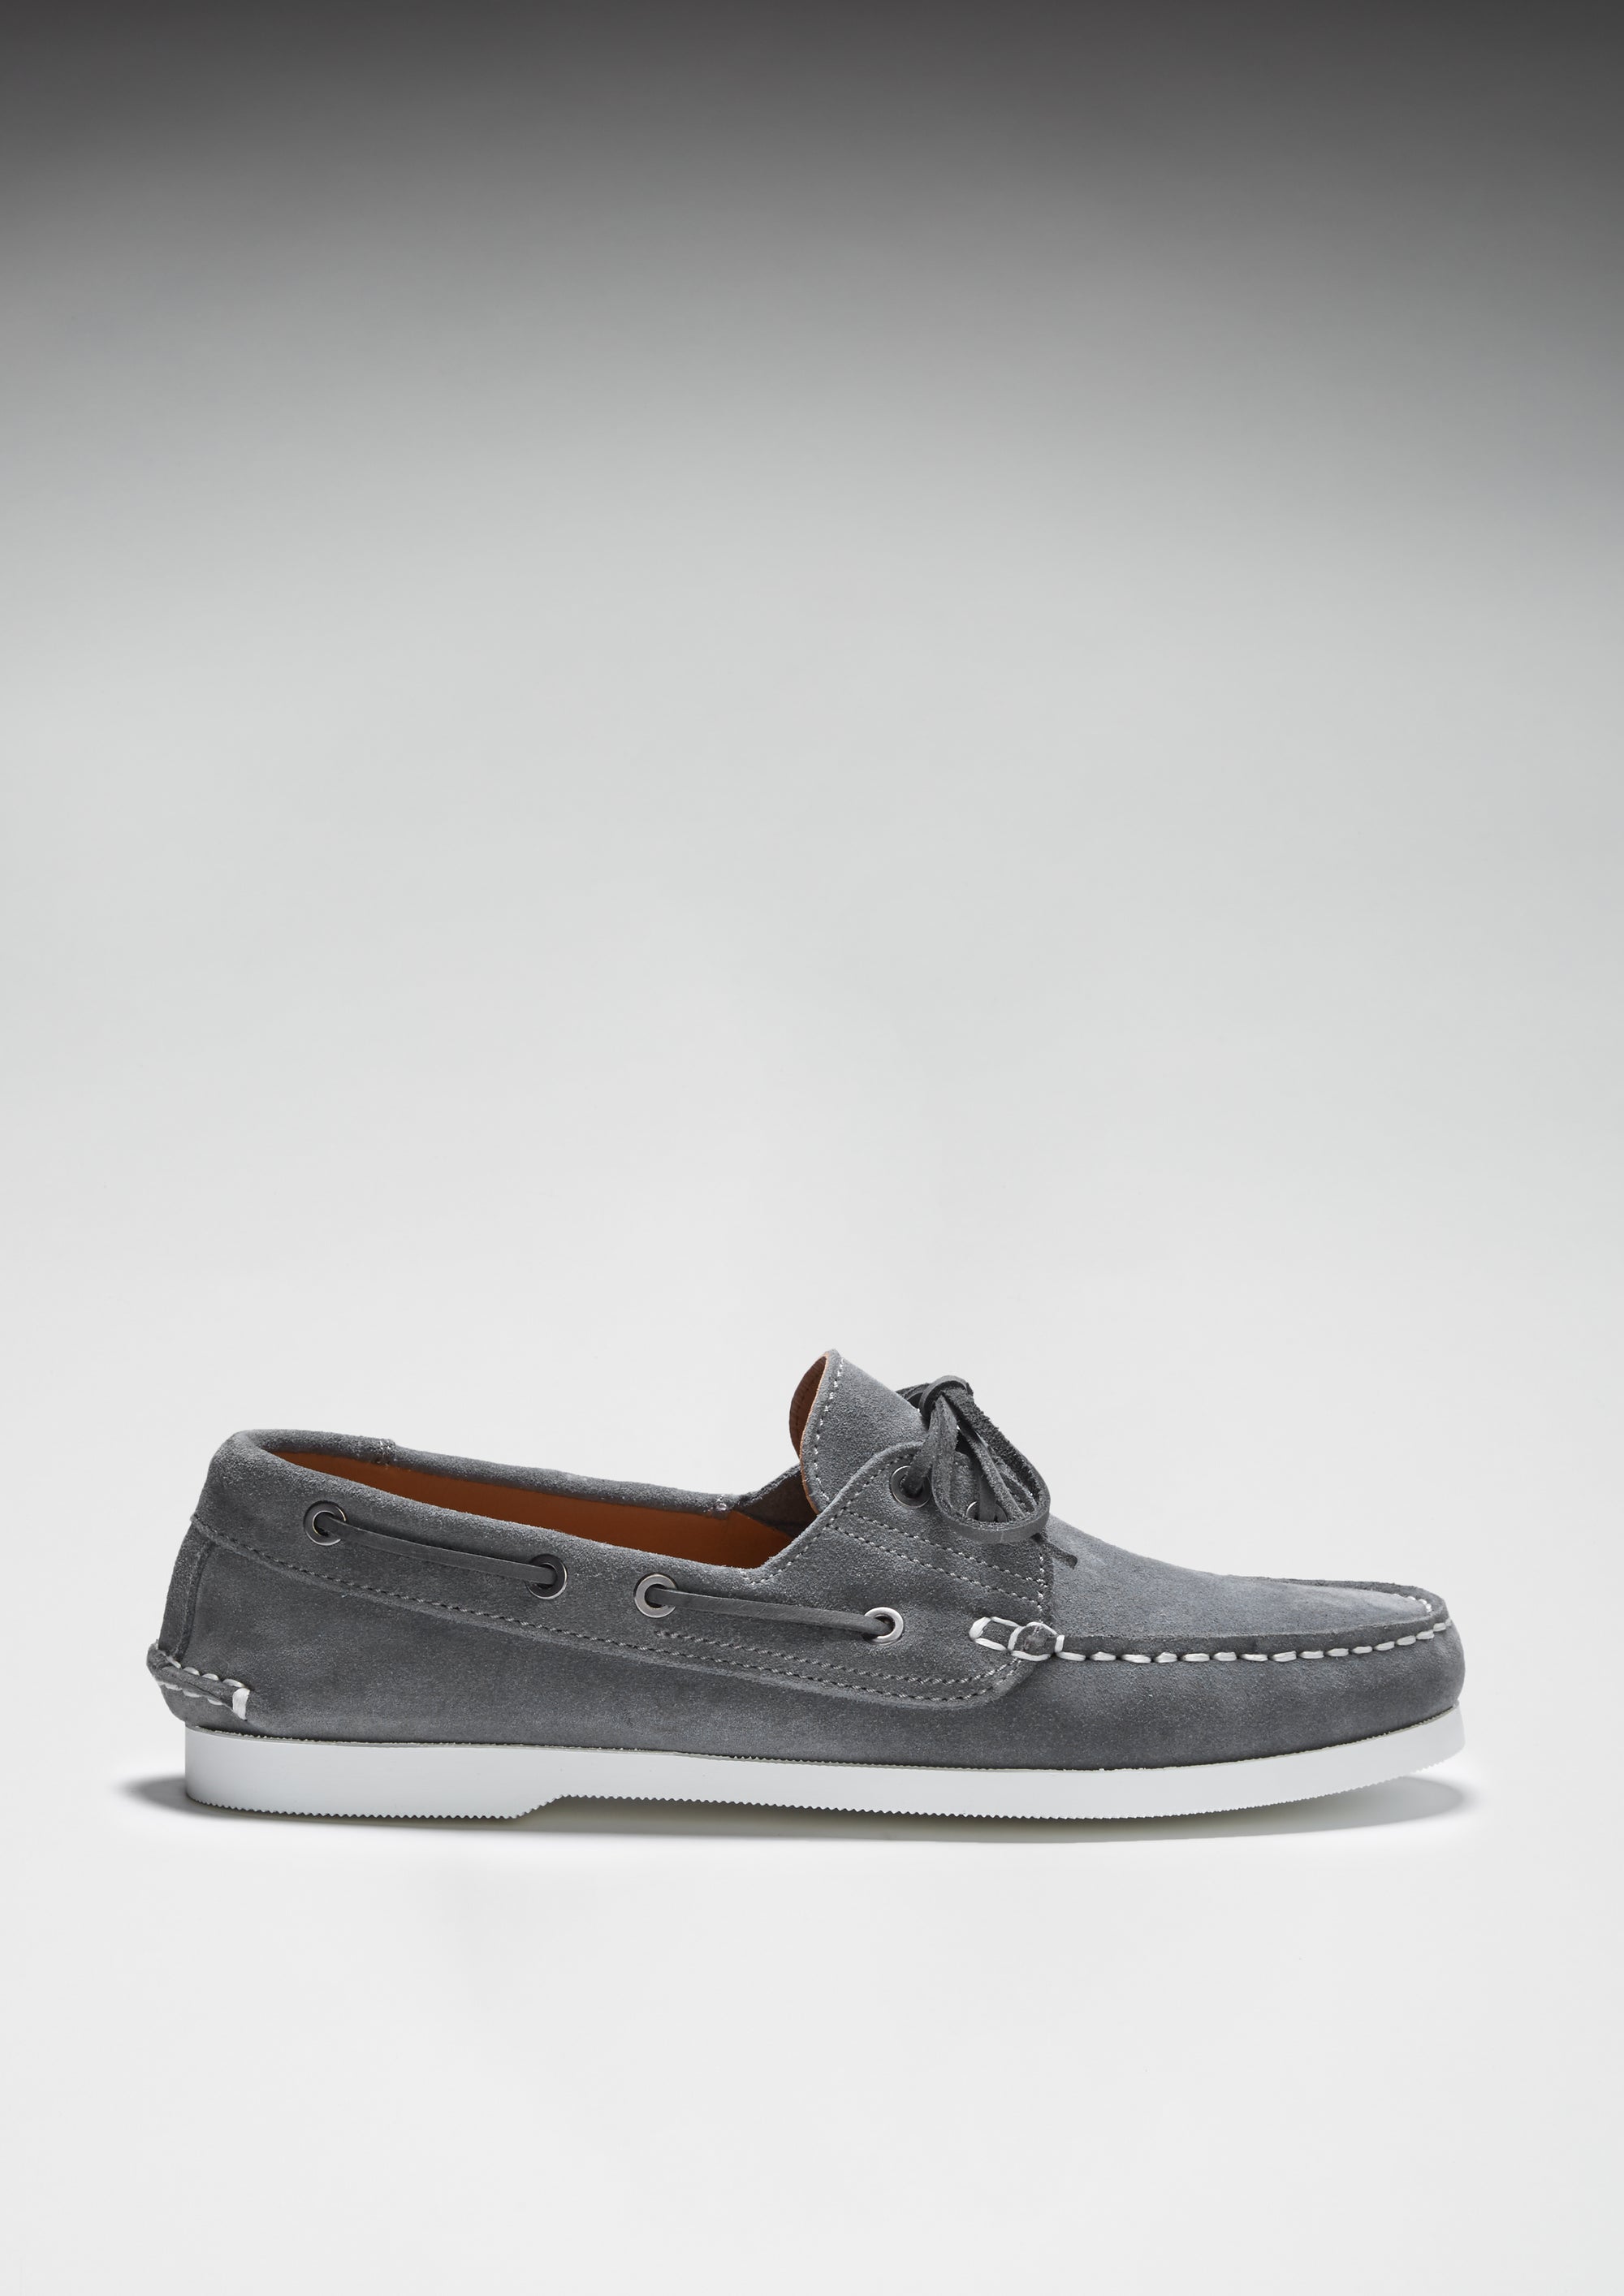 Deck Shoes, slate grey suede